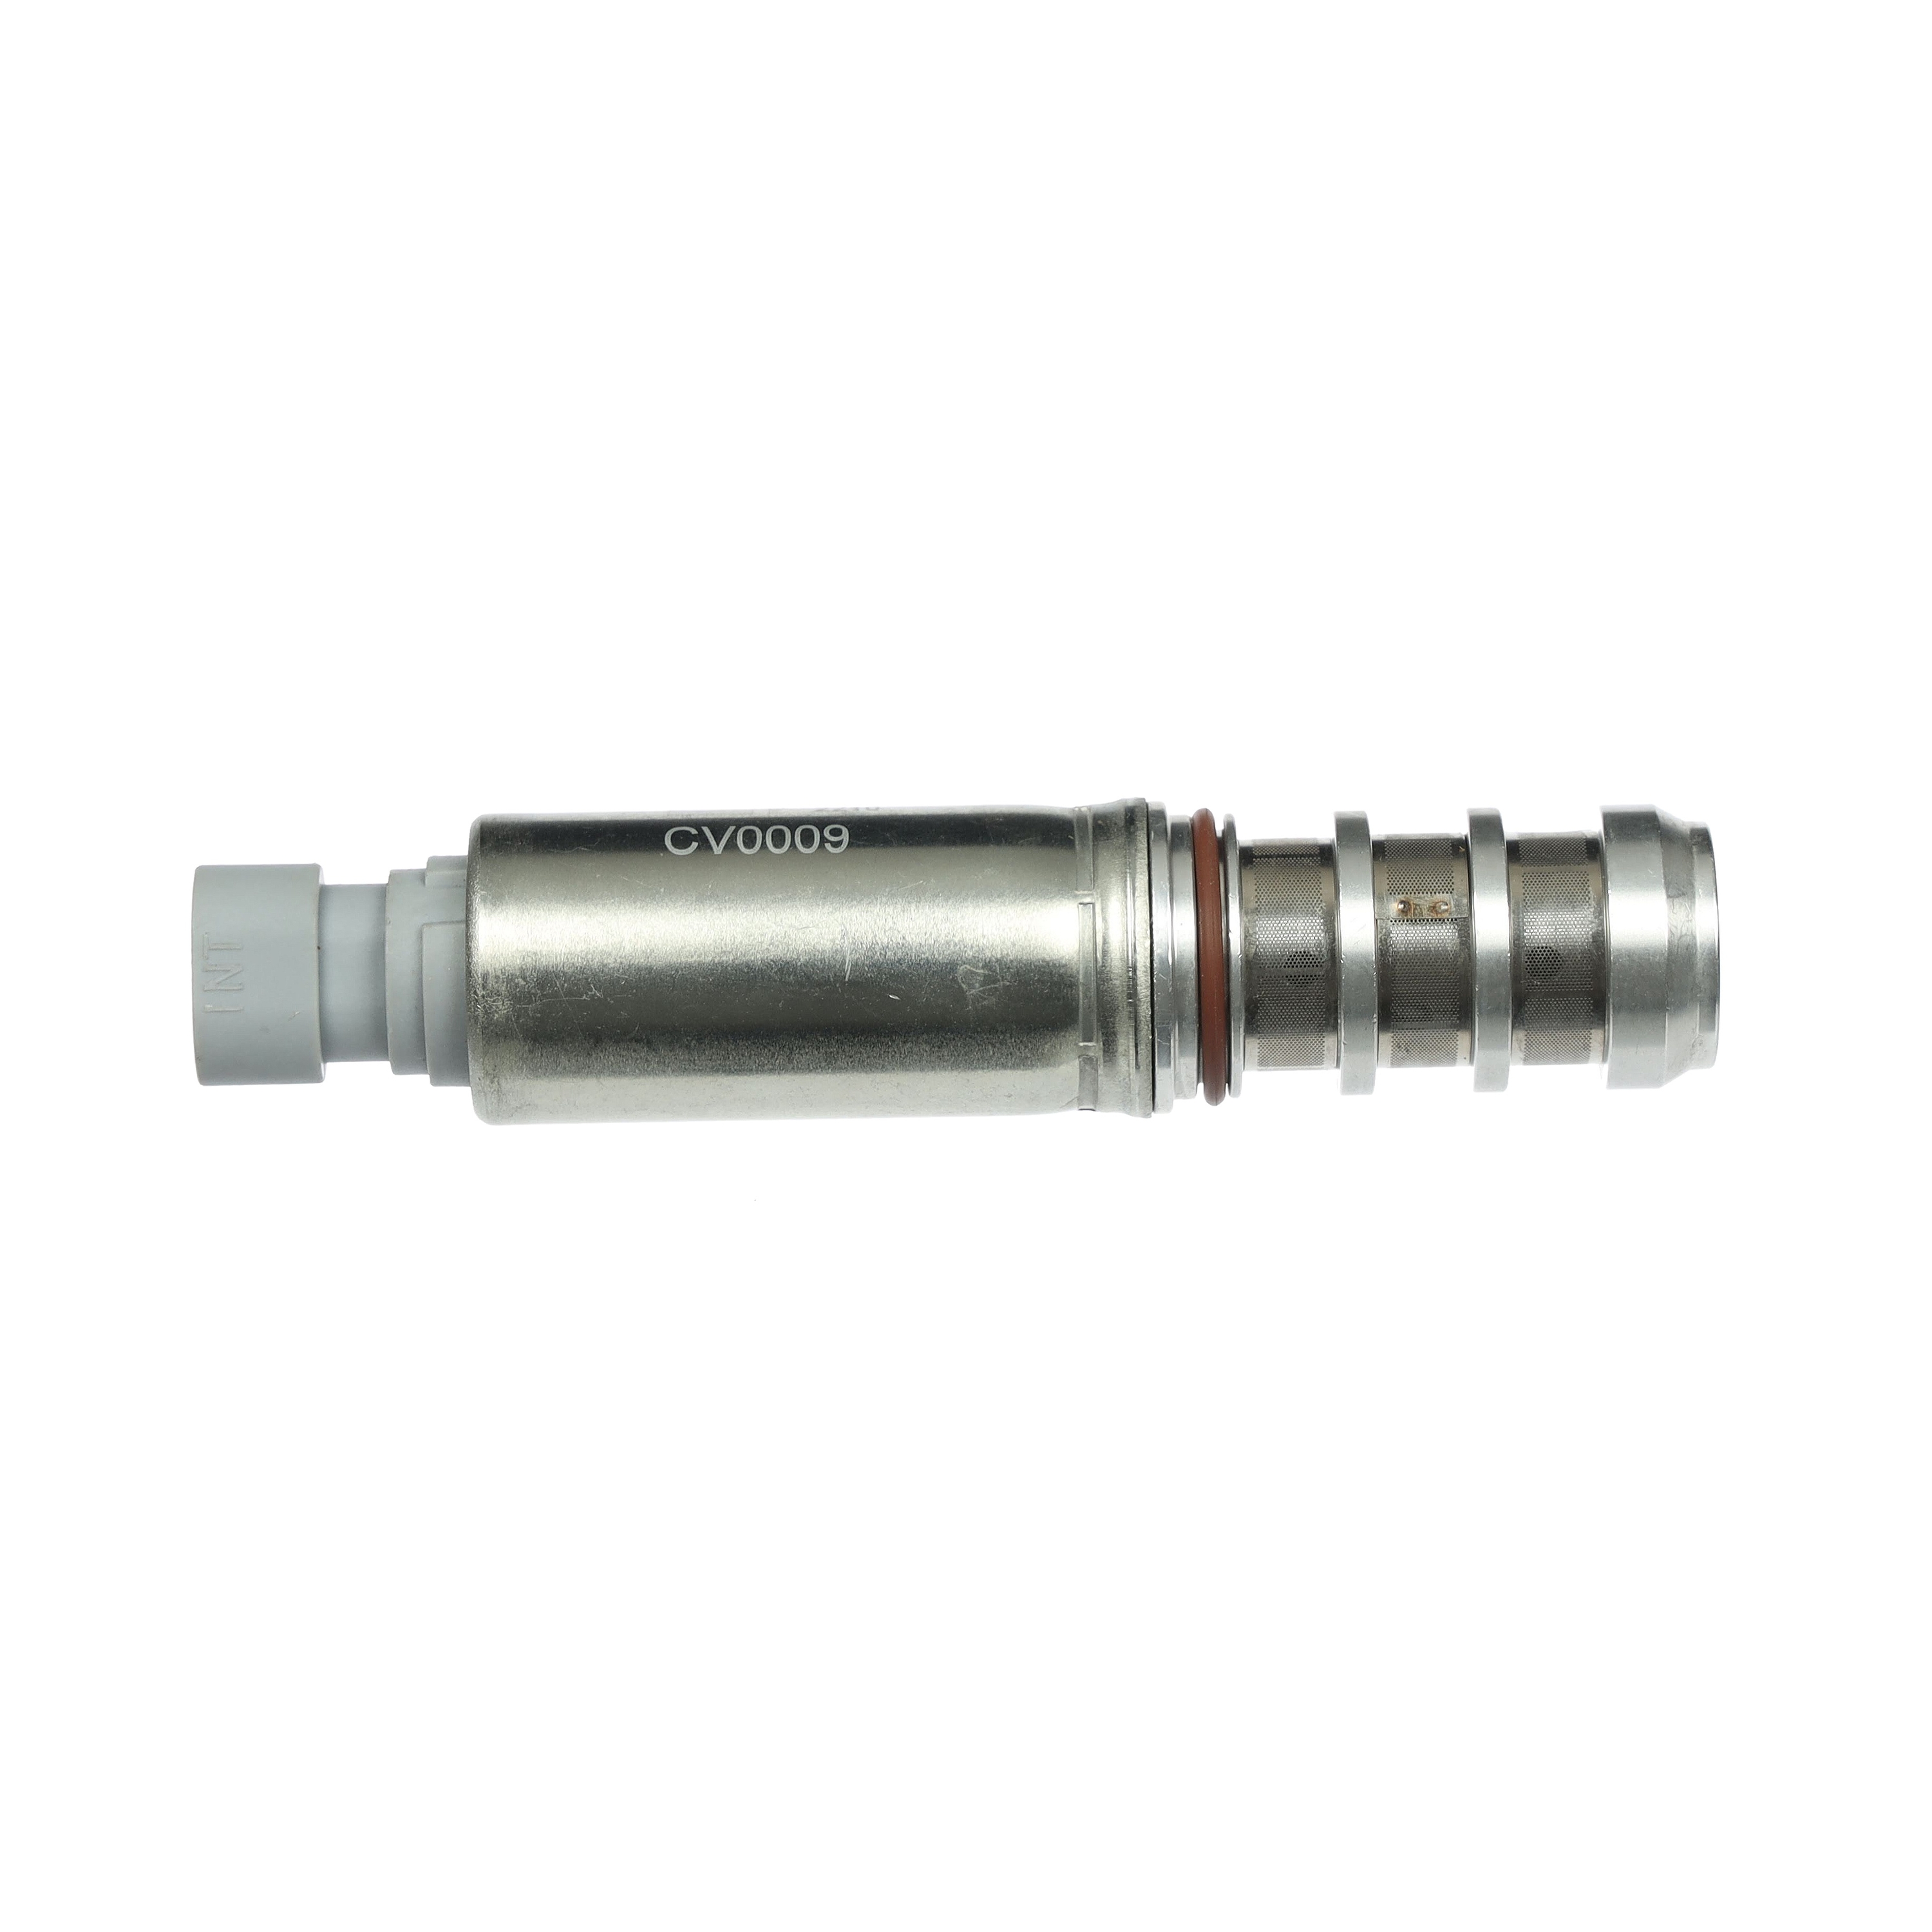 CV0009 ET ENGINETEAM Control valve, camshaft adjustment SUZUKI Intake Side, with screw, with seal ring